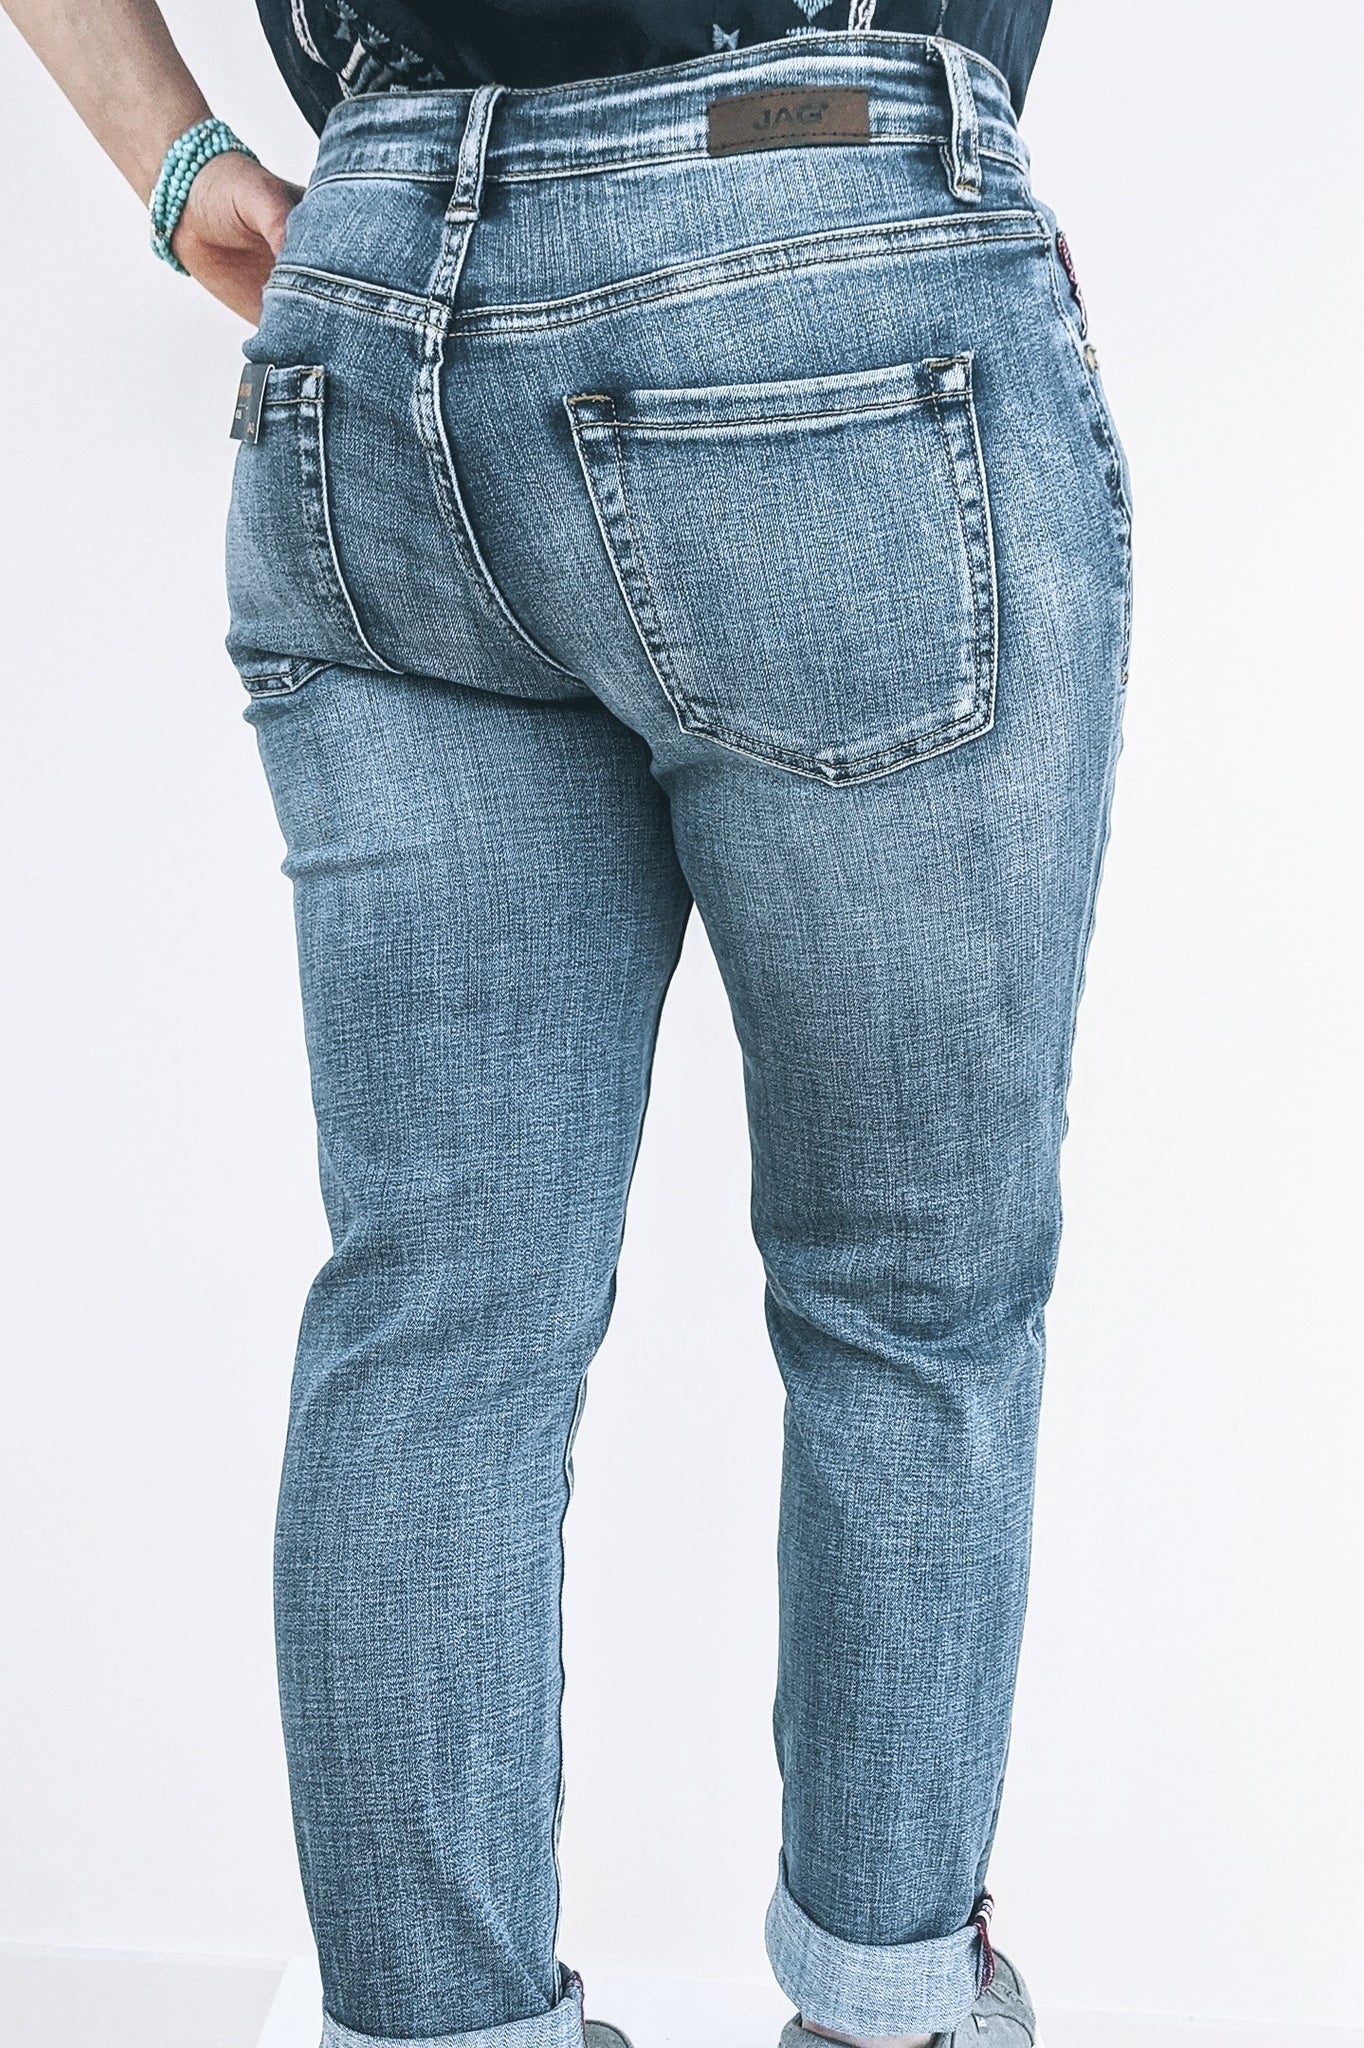 vintage girlfriend jeans